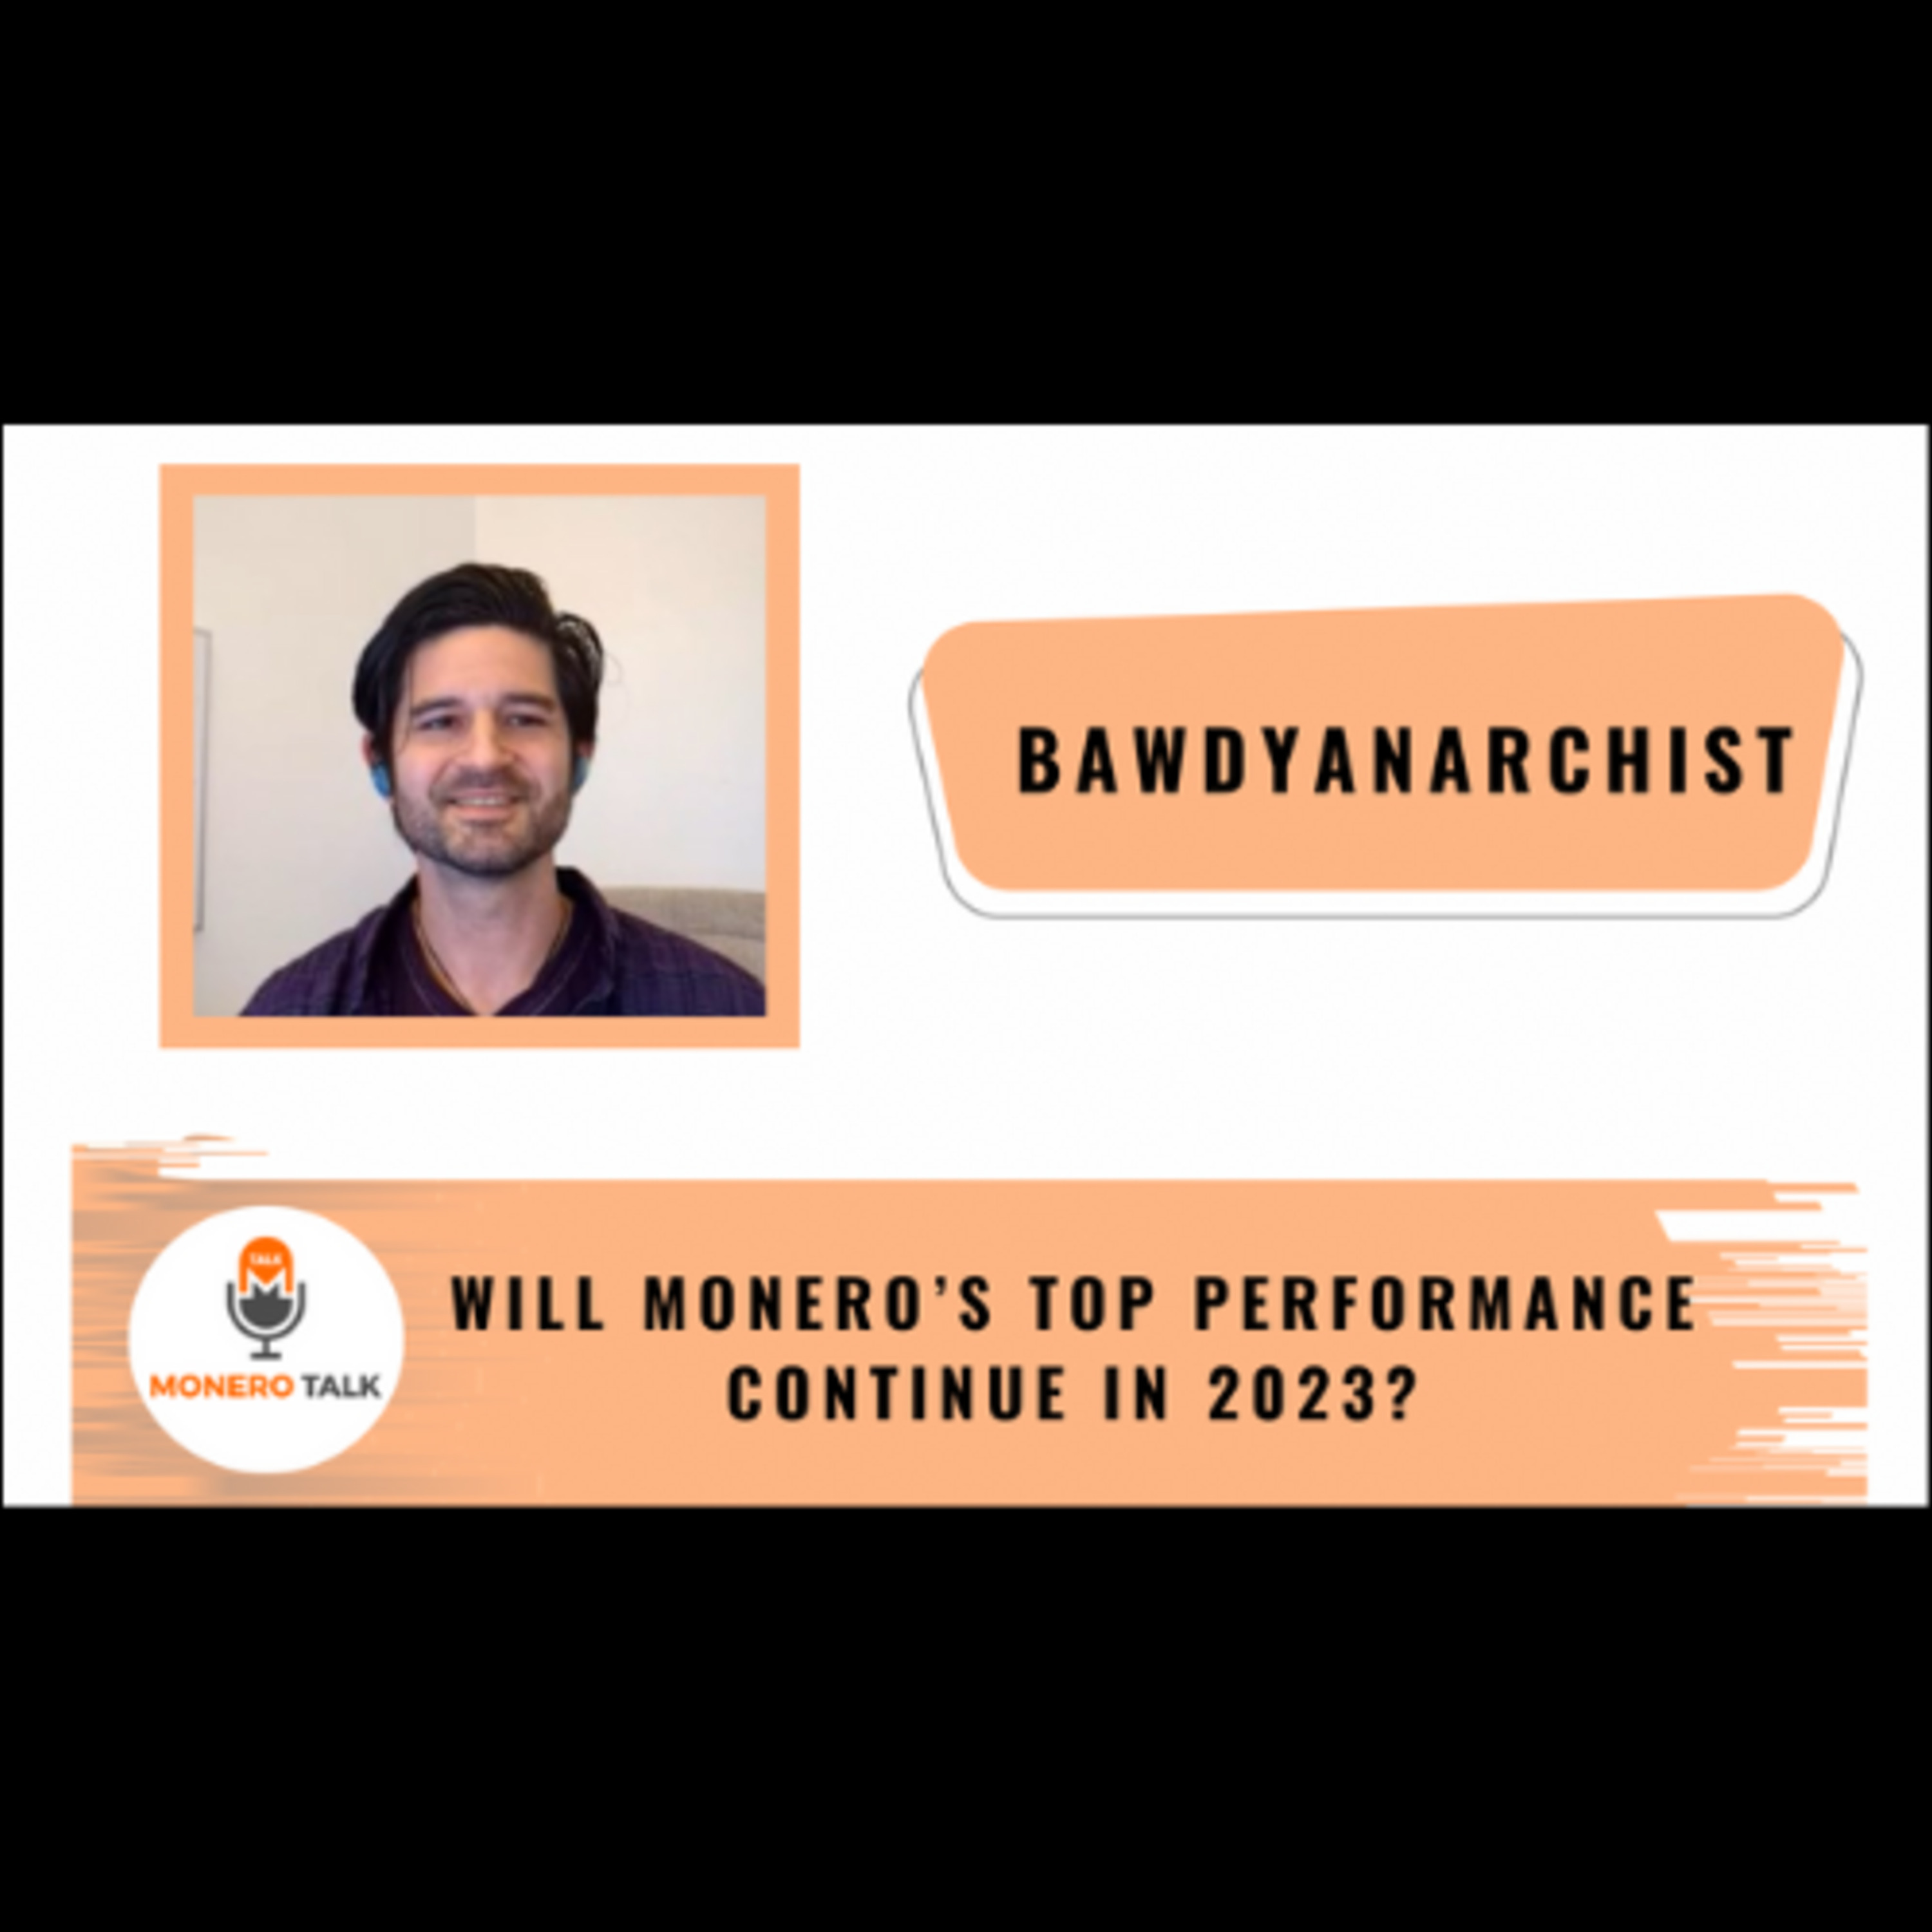 Will Monero’s top performance continue in 2023? - Bawdyanarchist